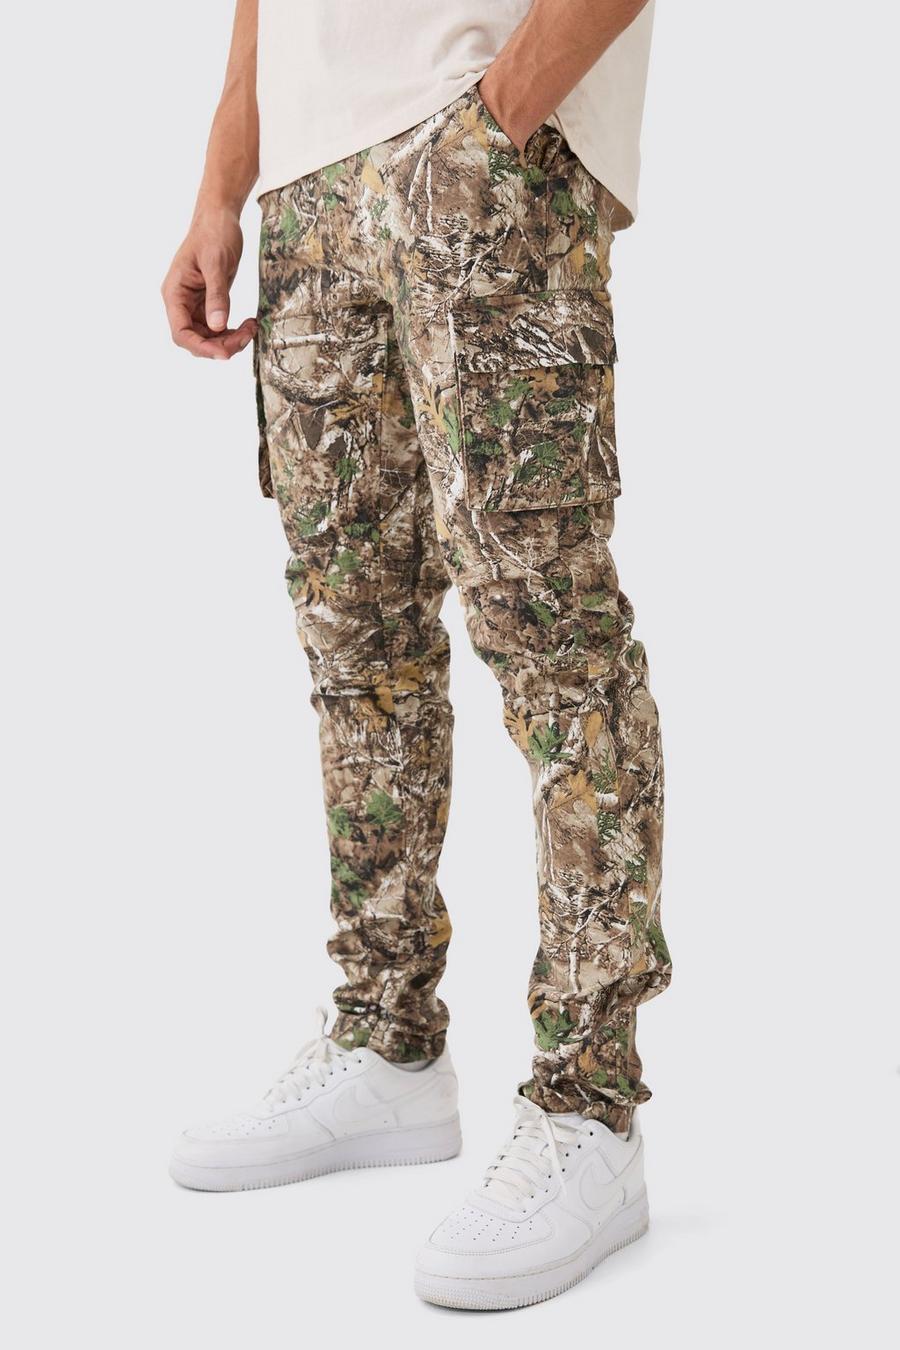 Khaki Kamouflagemönstrade byxor i slim fit med fickor